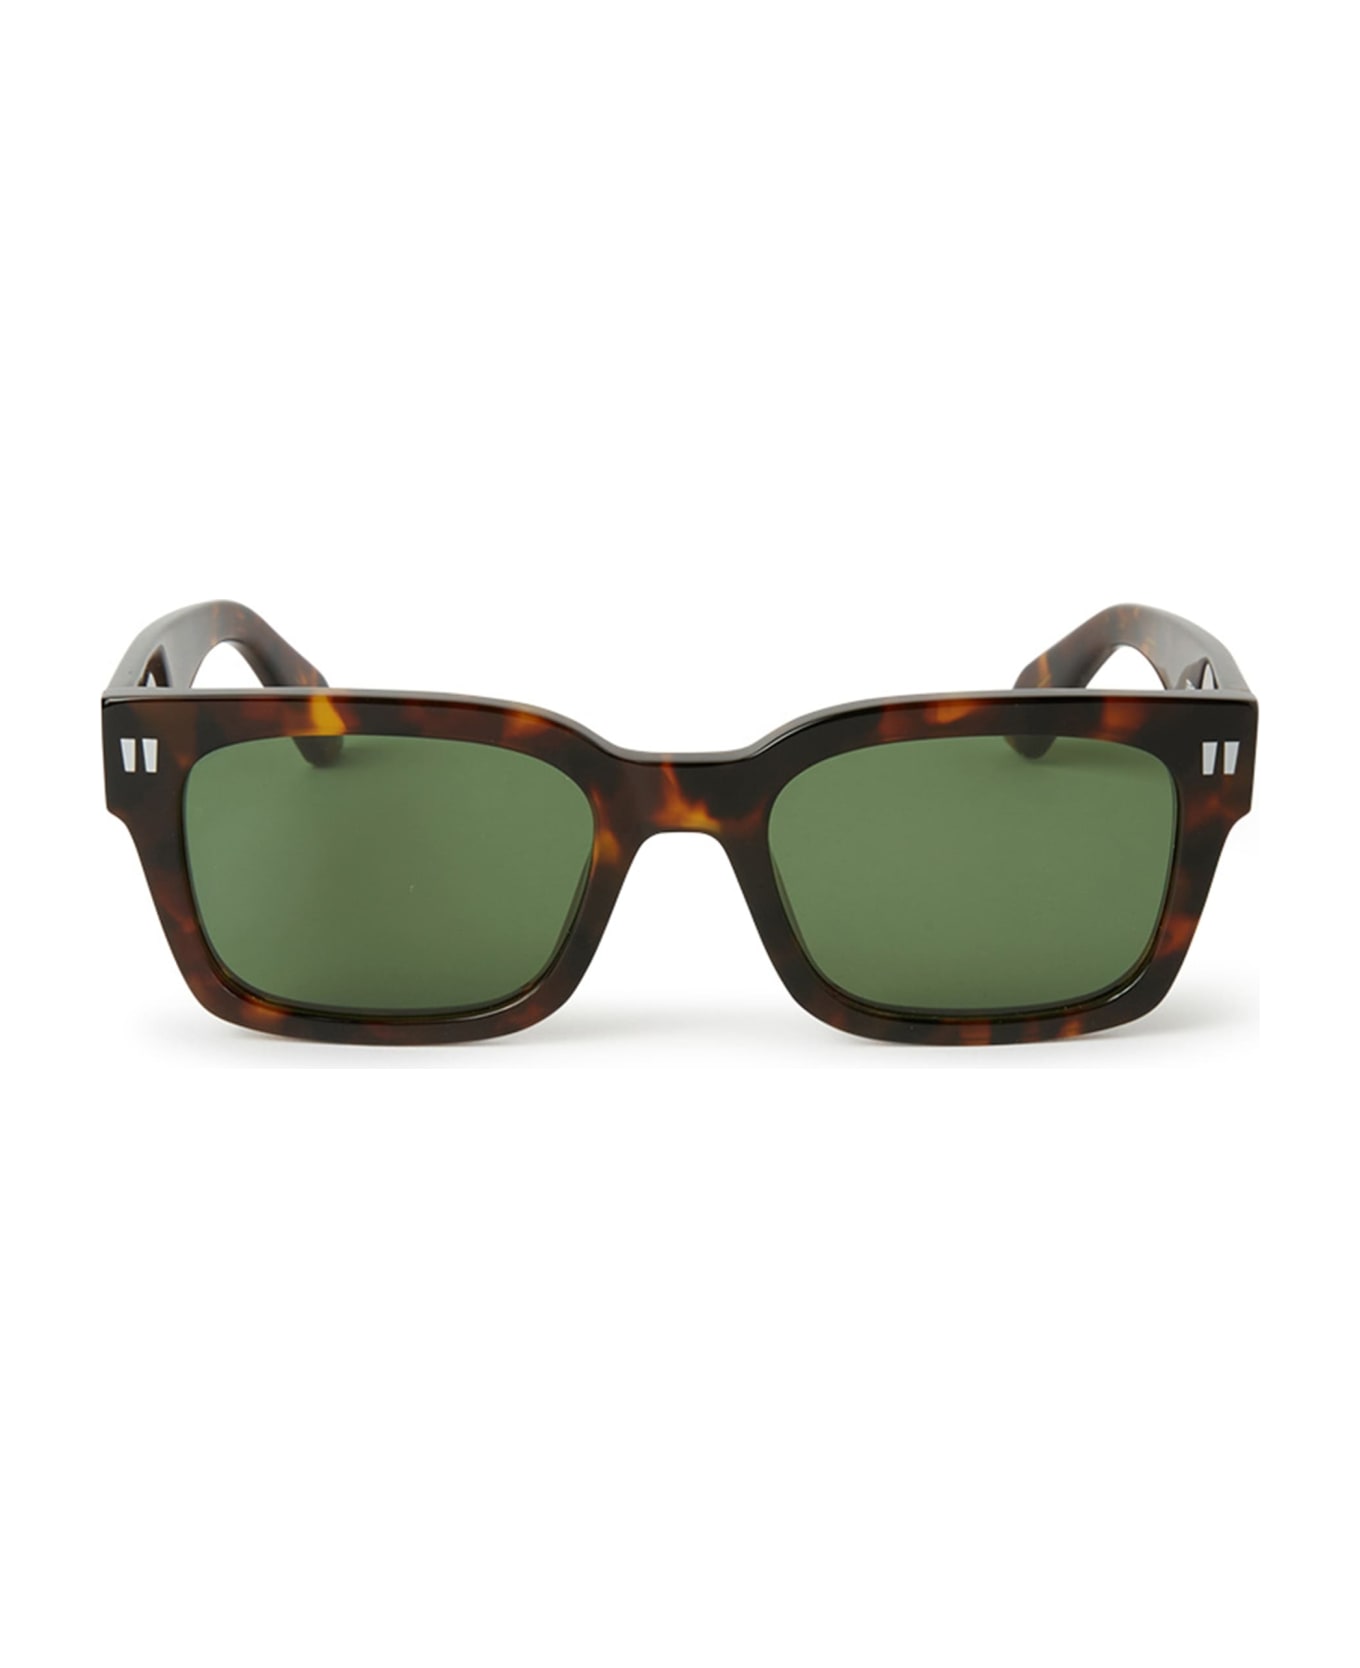 Off-White Midland - Havana / Green Sunglasses - Havana